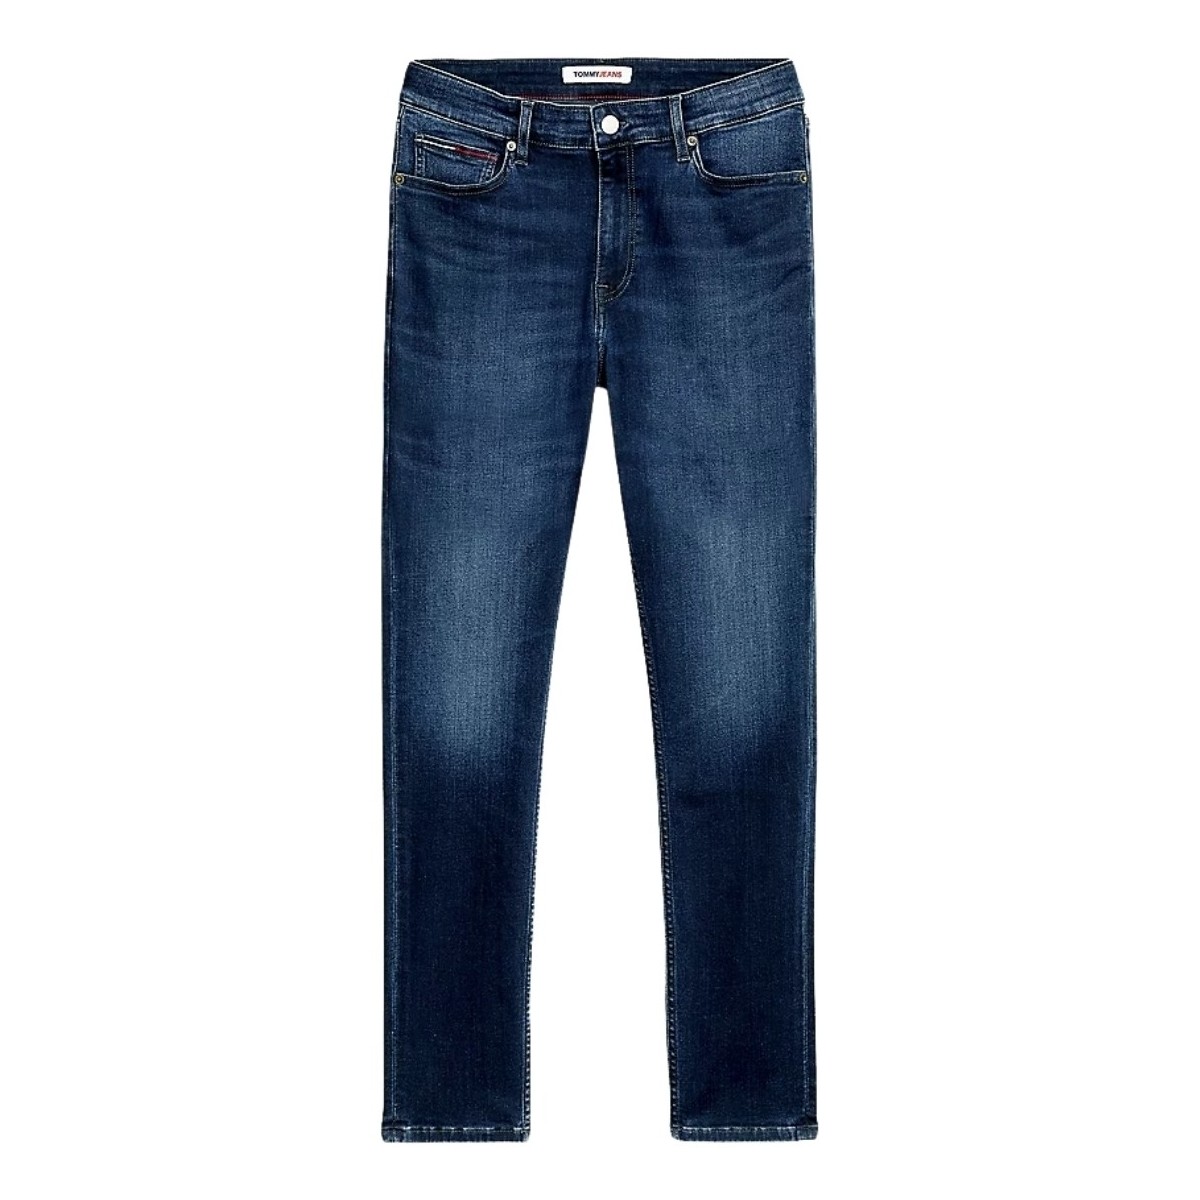 Vêtements Homme Jeans Tommy Jeans Jean slim  Ref 54044 1BJ Denim dark Bleu